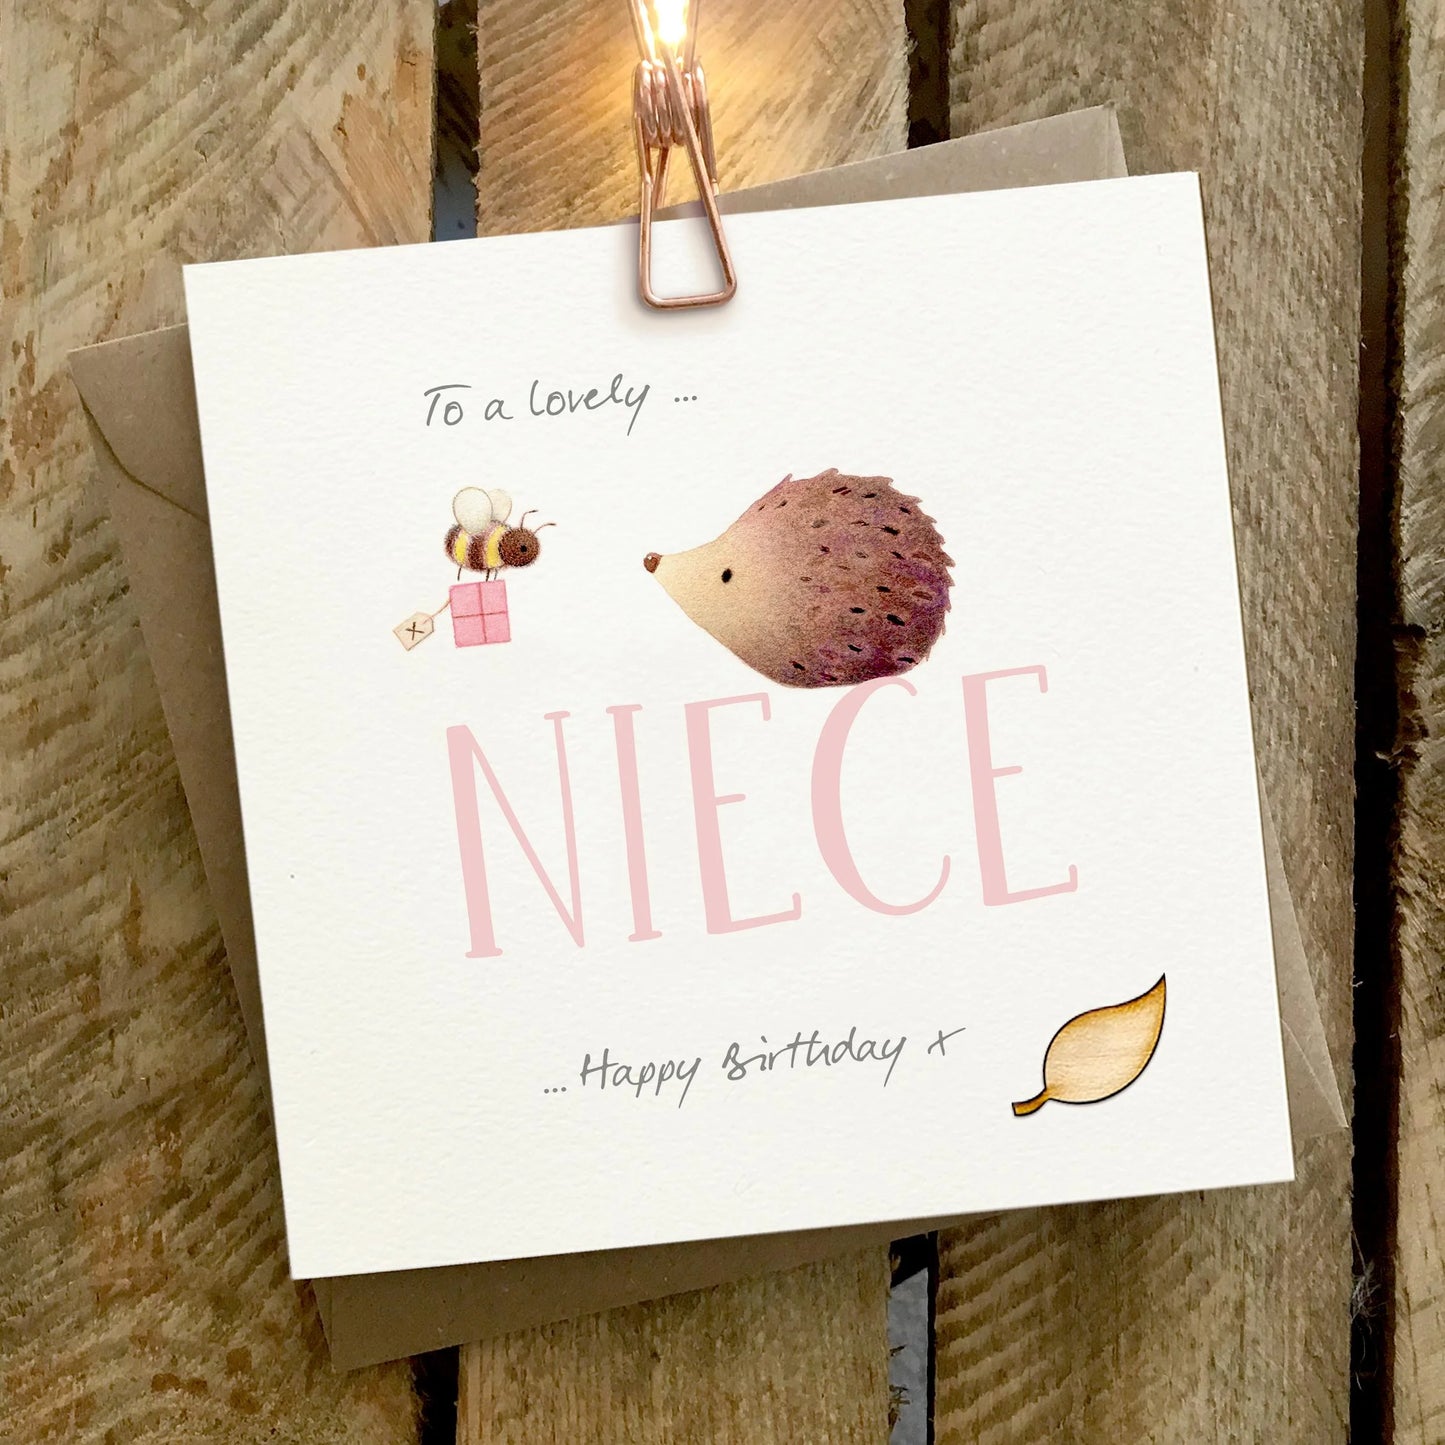 Niece Birthday Greetings Card